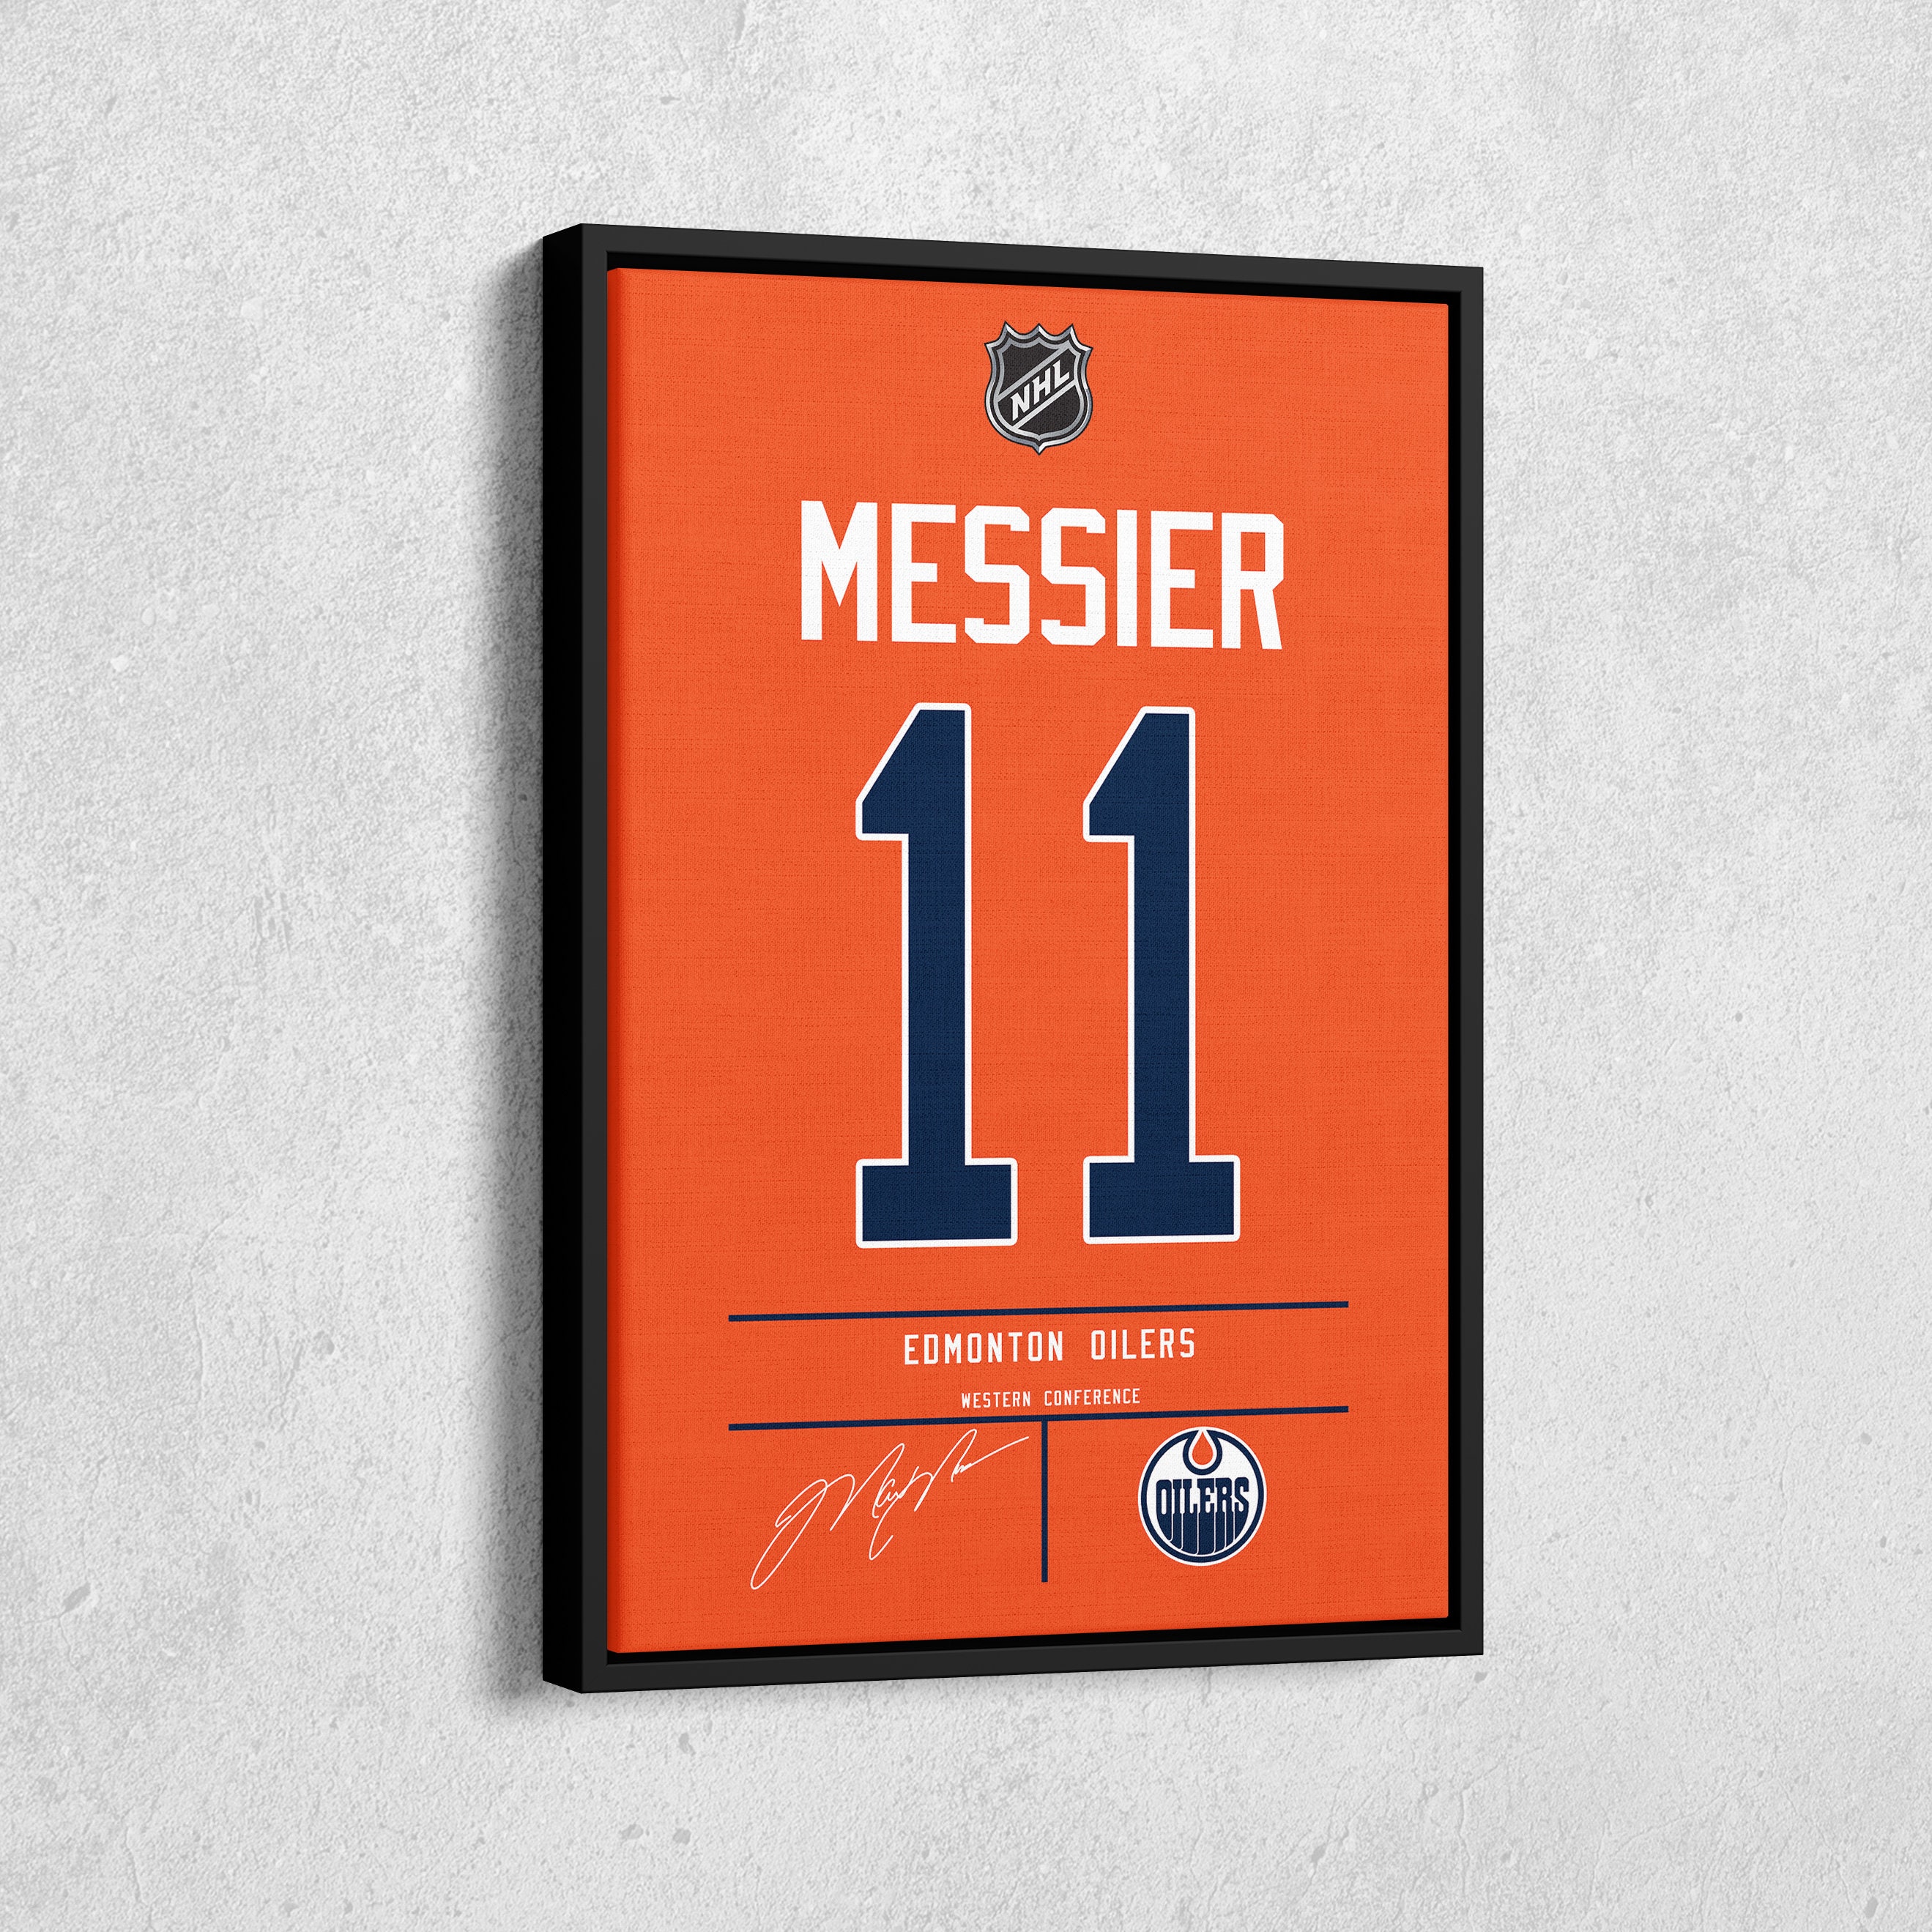 Wayne Gretzky Signed Edmonton Oilers Jersey - WG Authentic COA